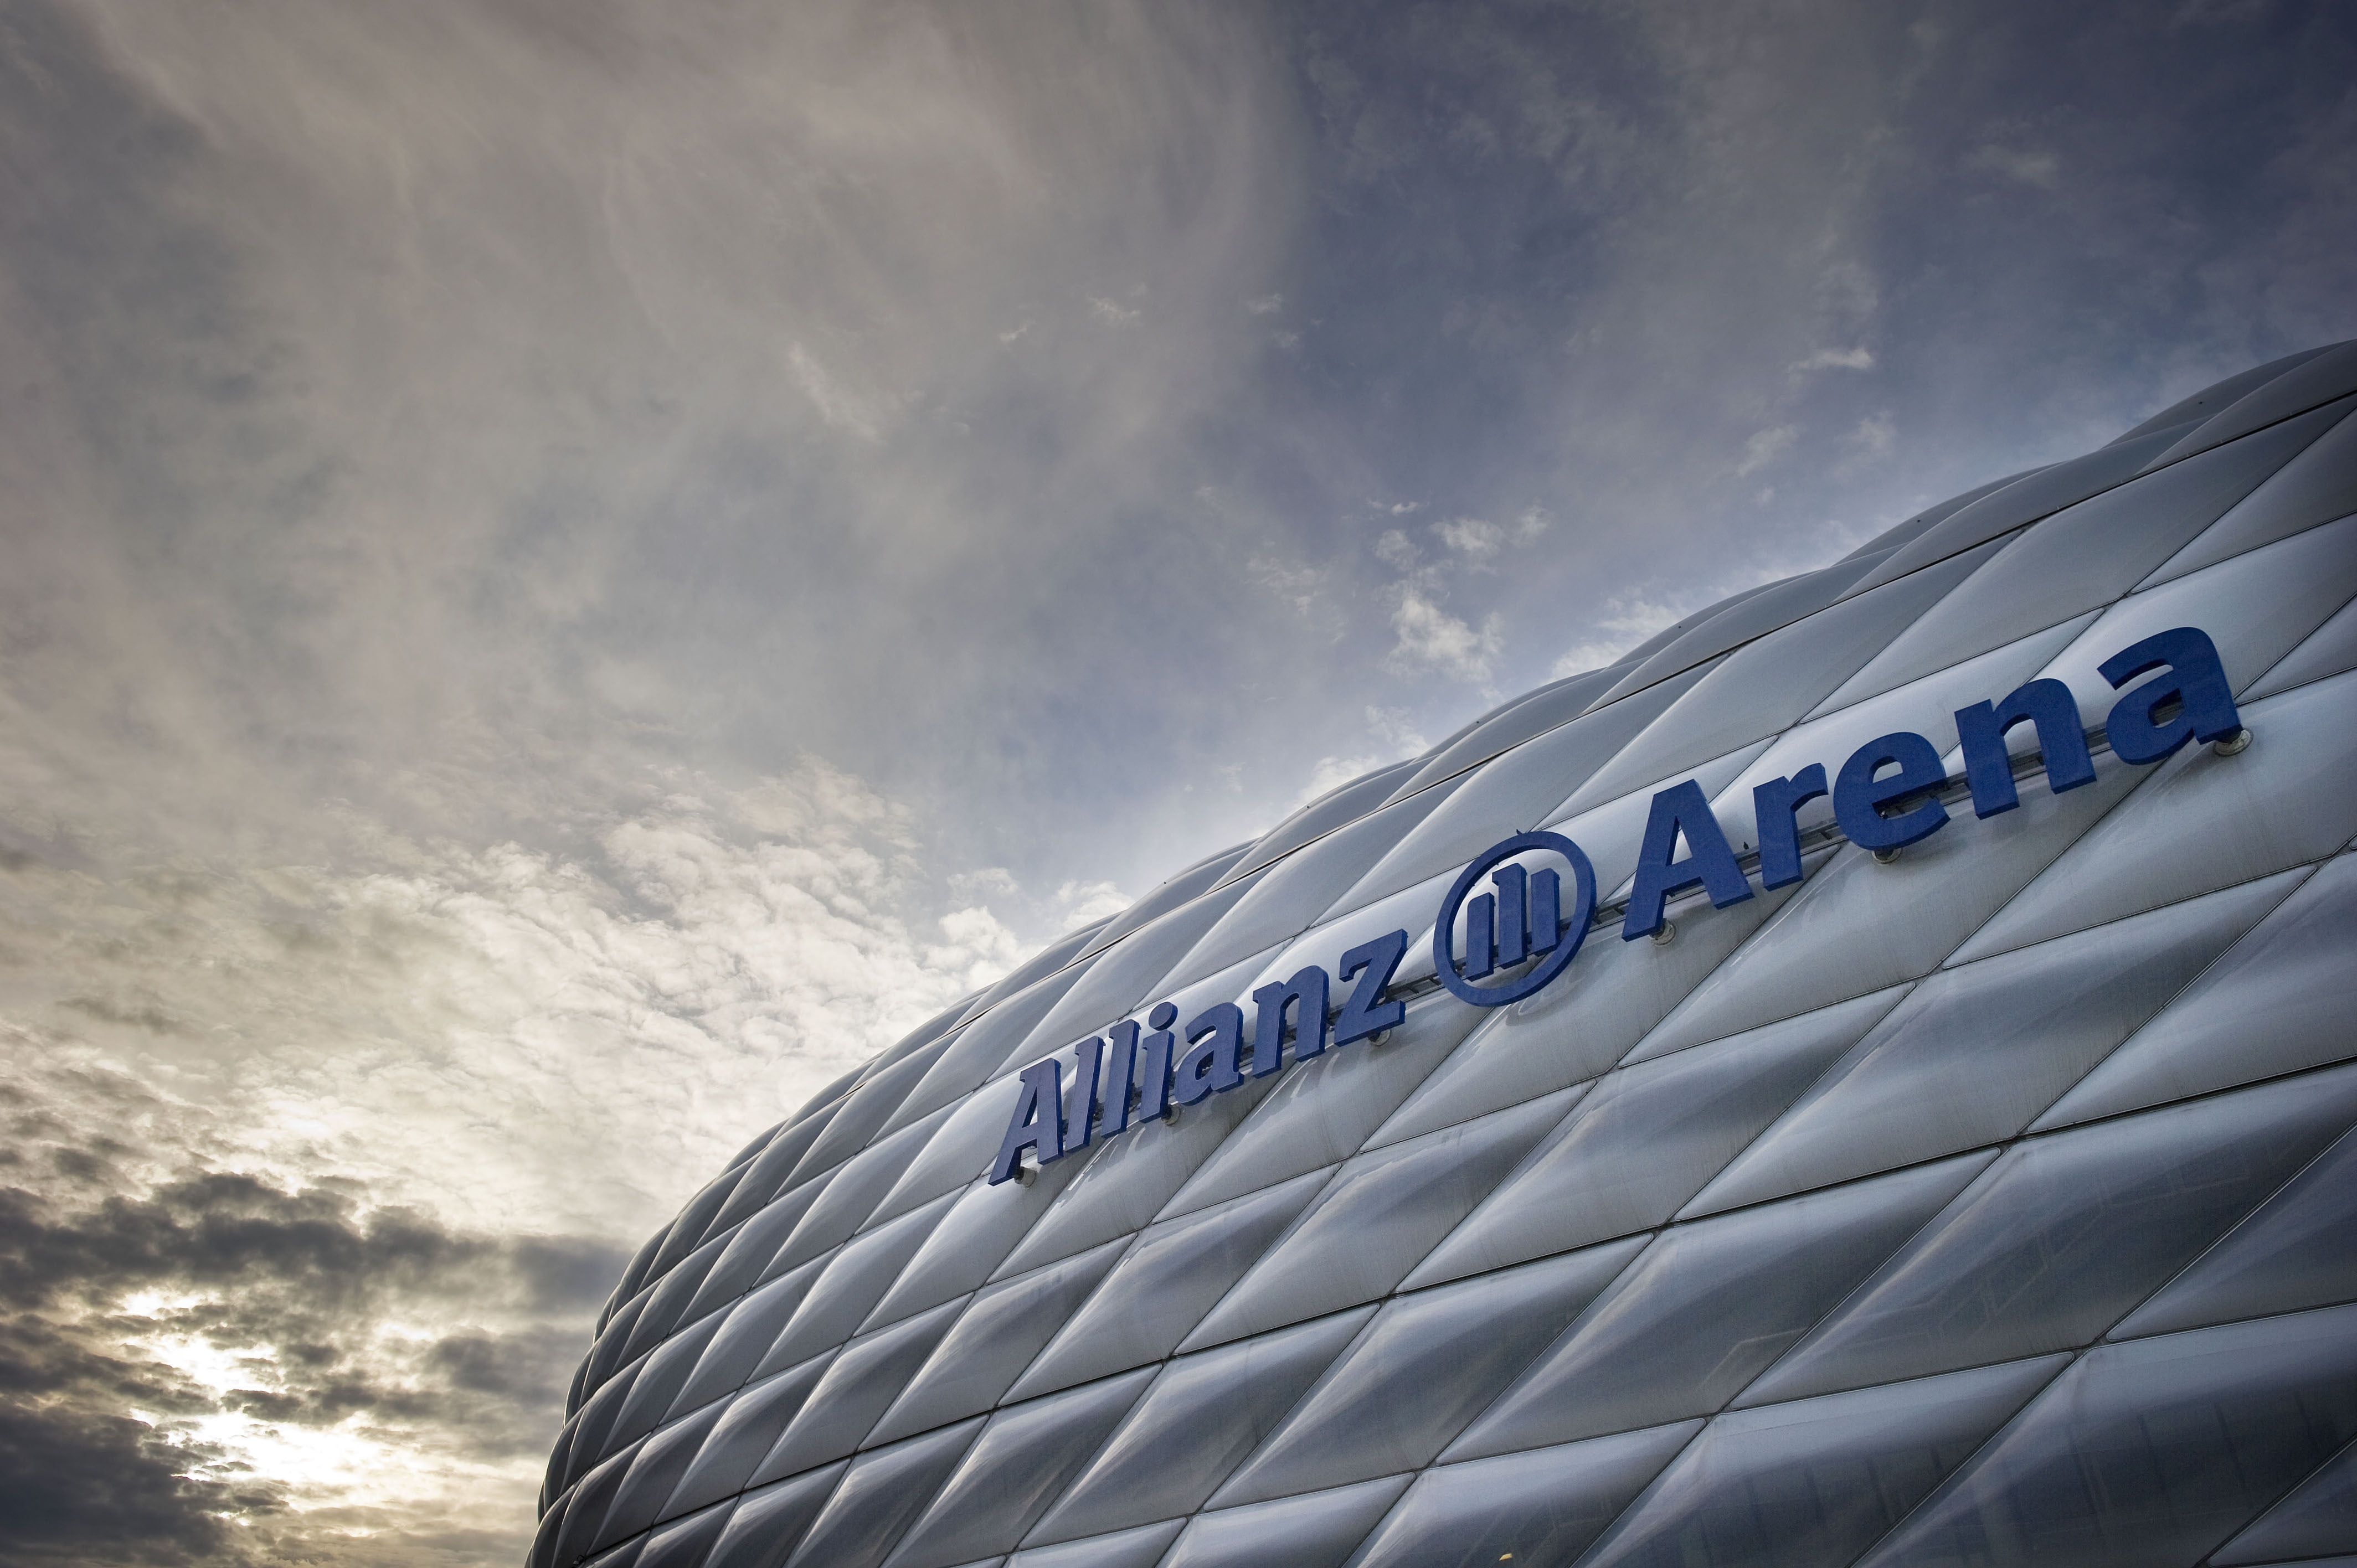 Allianz Arena logo #Germany #Munich #Bayern #Germany #Munich #stadium #Stadium Allianz Arena Allianz Arena K #wallpaper #hdw. Bayern, Stadium wallpaper, Stadium